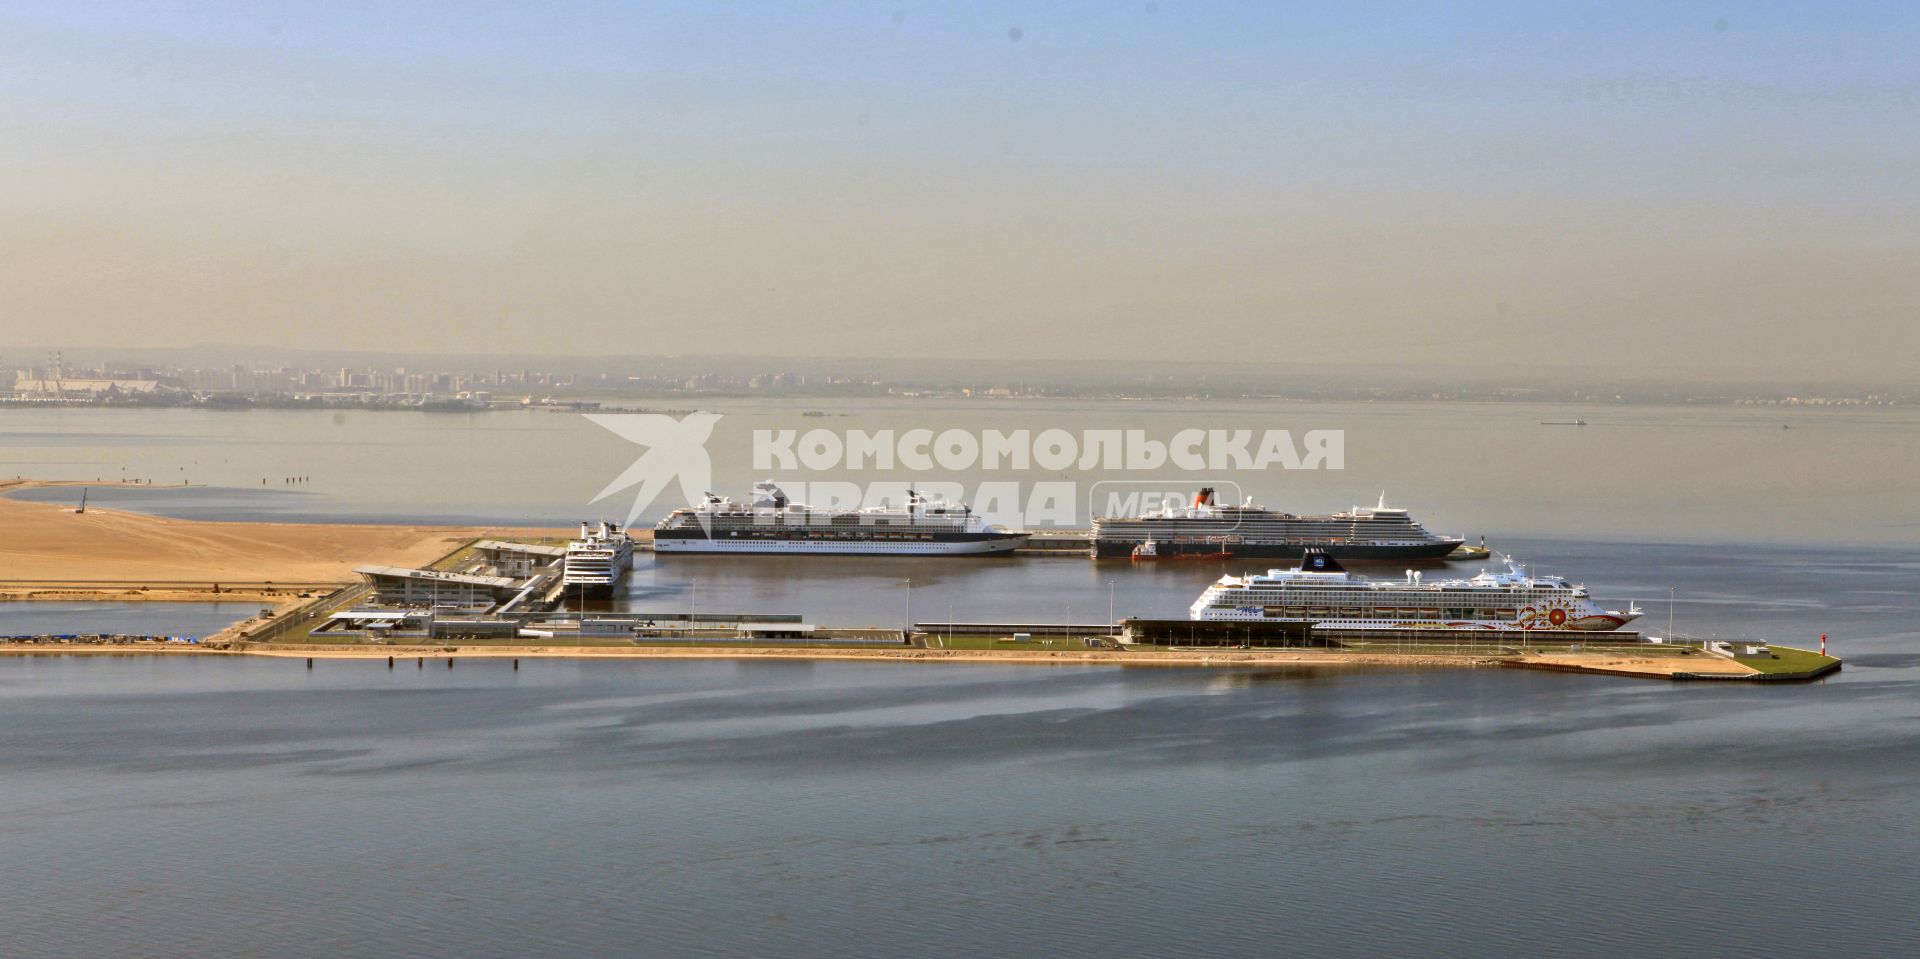 облет КАДа ( кольцевая автодорога ) на вертолете 
санкт-петербург
пасажирский порт морской  фасад 
09.06.2011